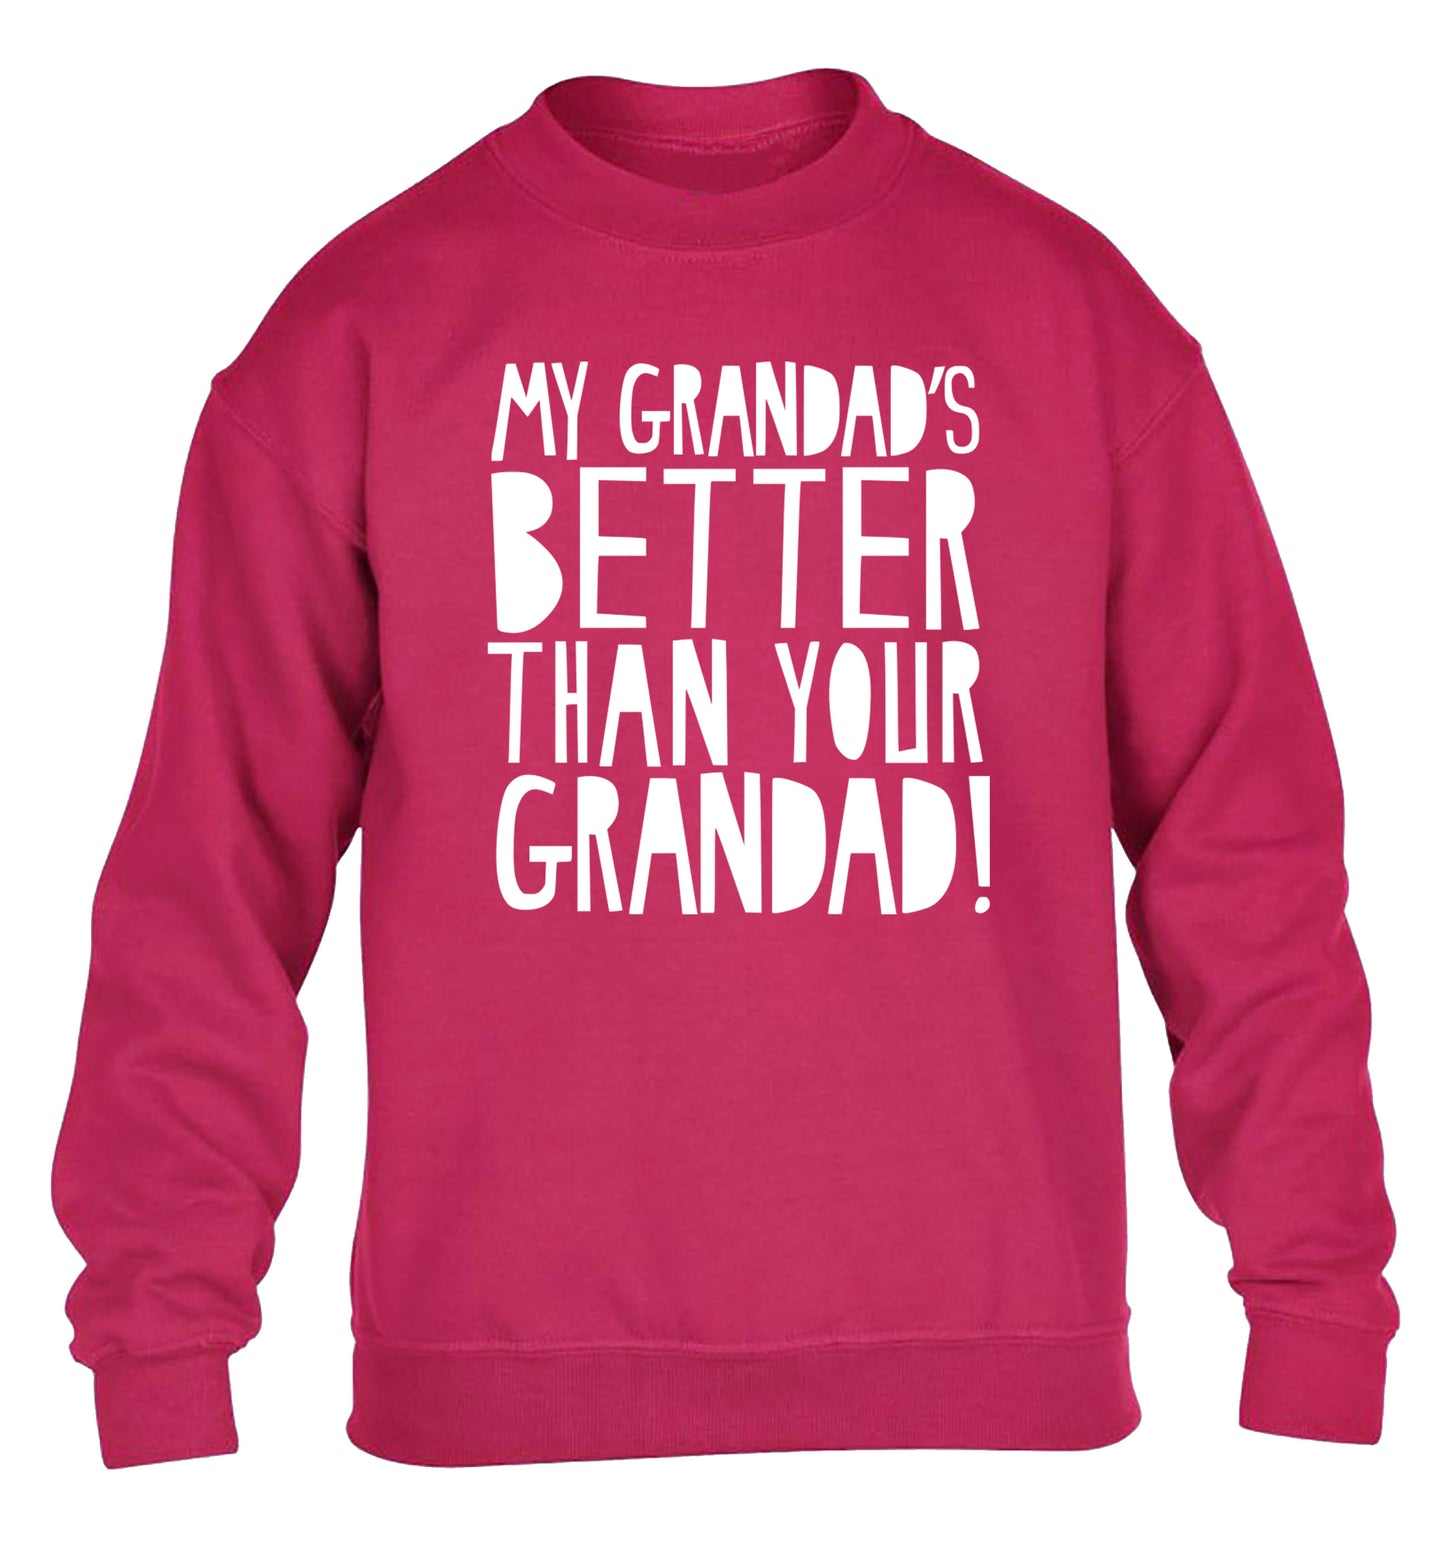 My Grandad's better than your grandad children's pink sweater 12-13 Years